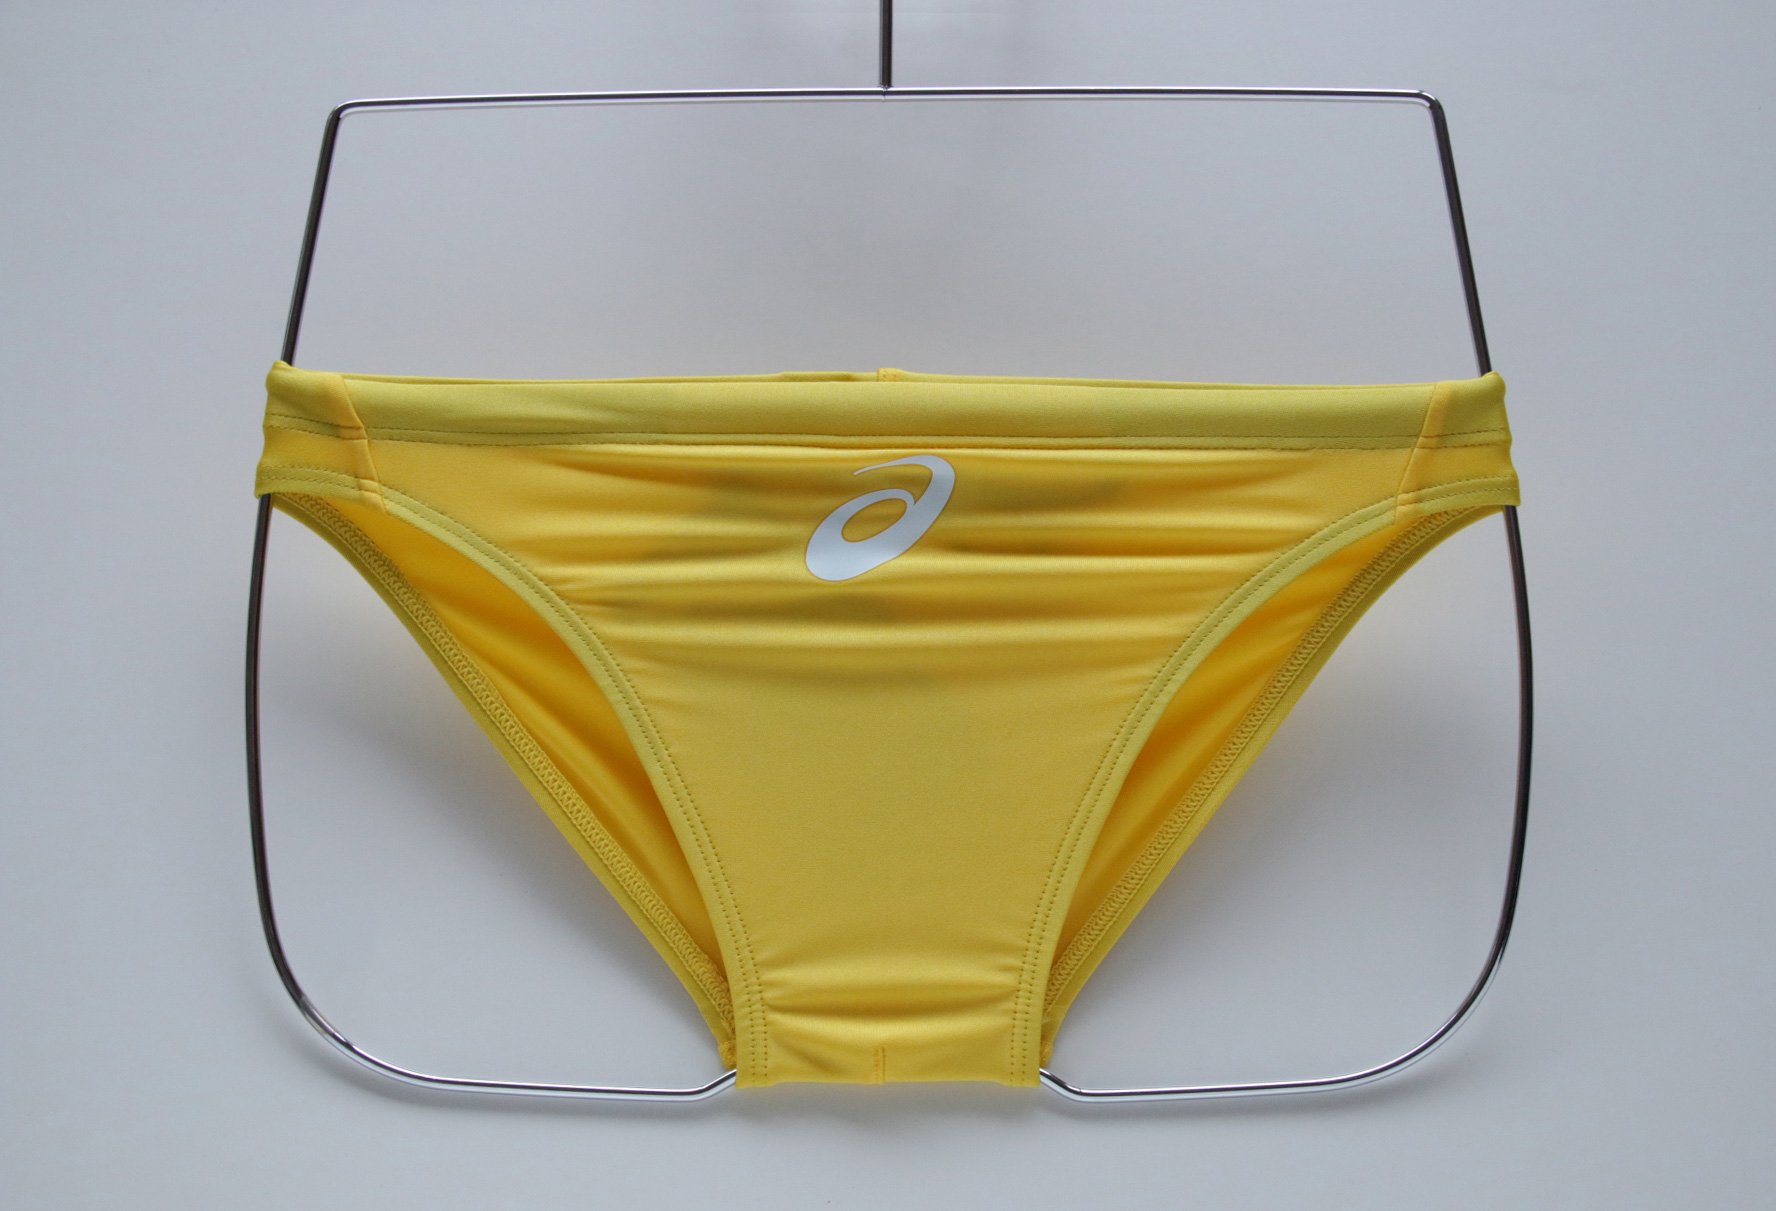 asics Men's Competition Swimwear Successor to HYDRO-CD Brief Yellow